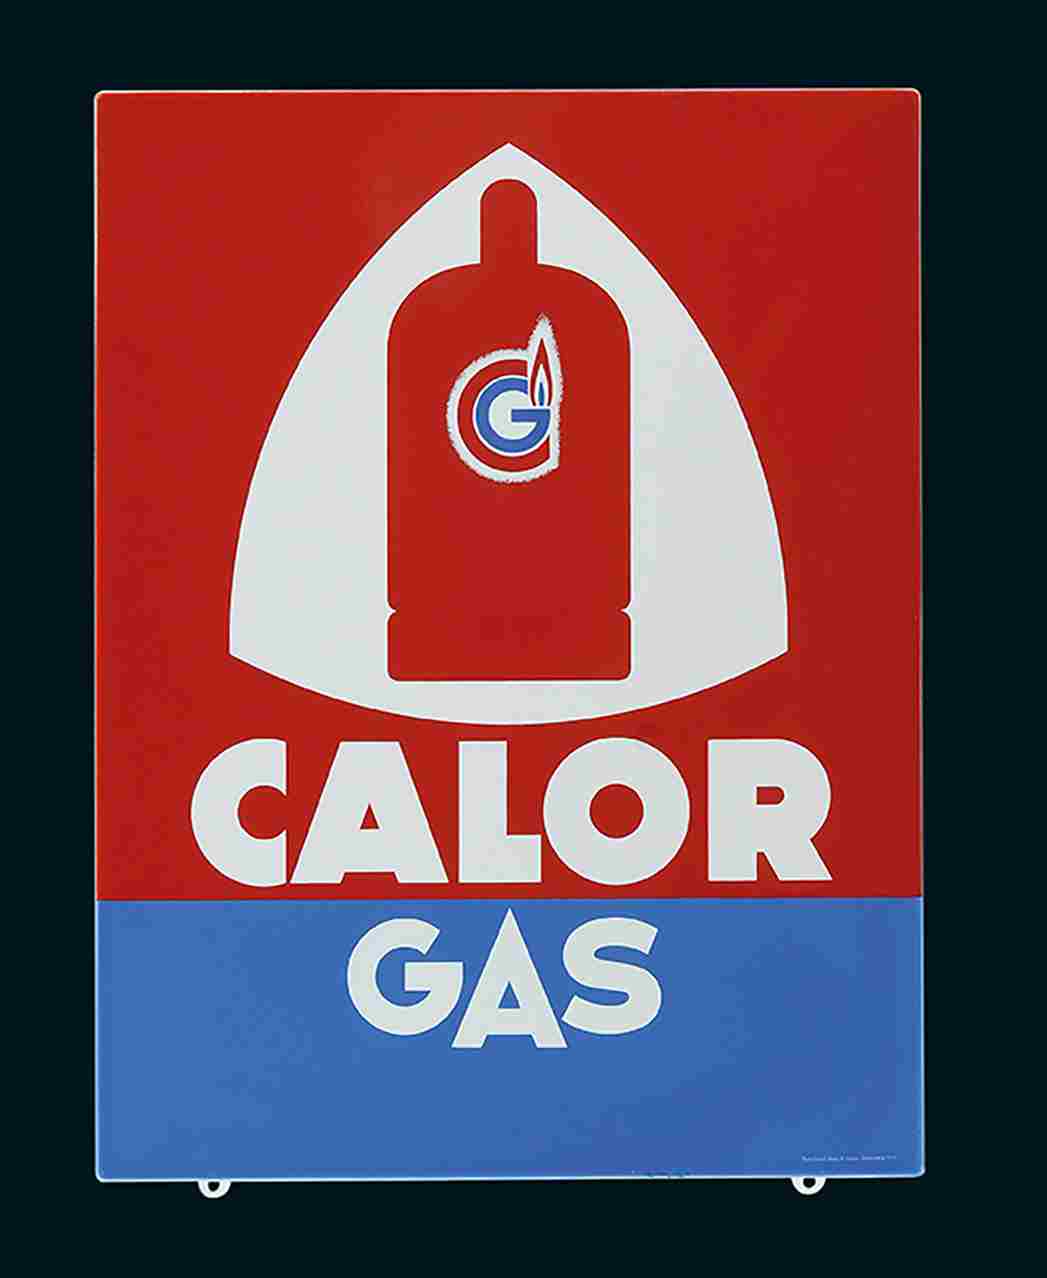 Calor Gas "G" 